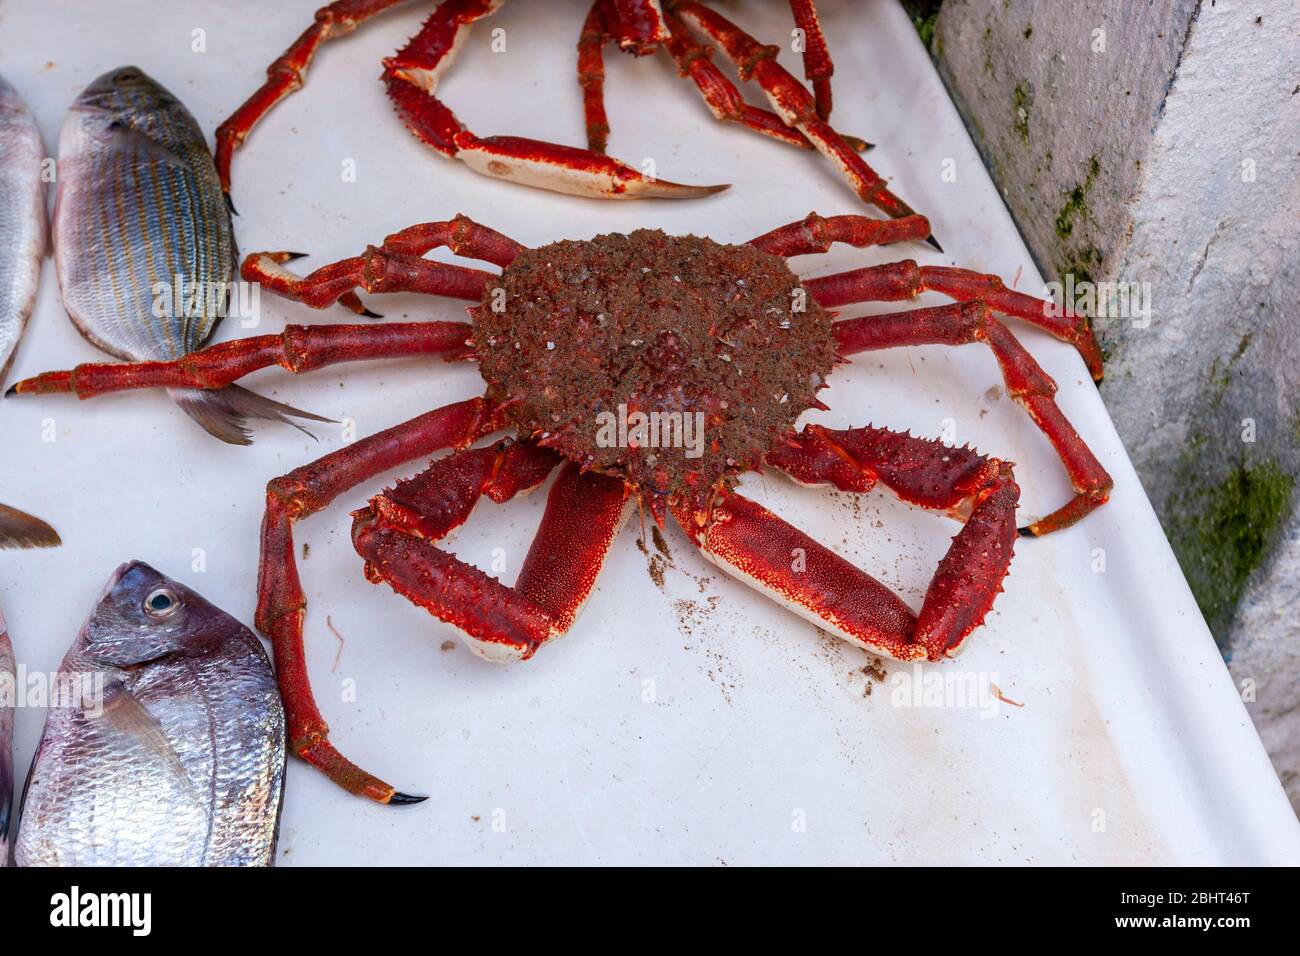 Spider crab in Fish market in Essaouira, Morocco Stock Photo